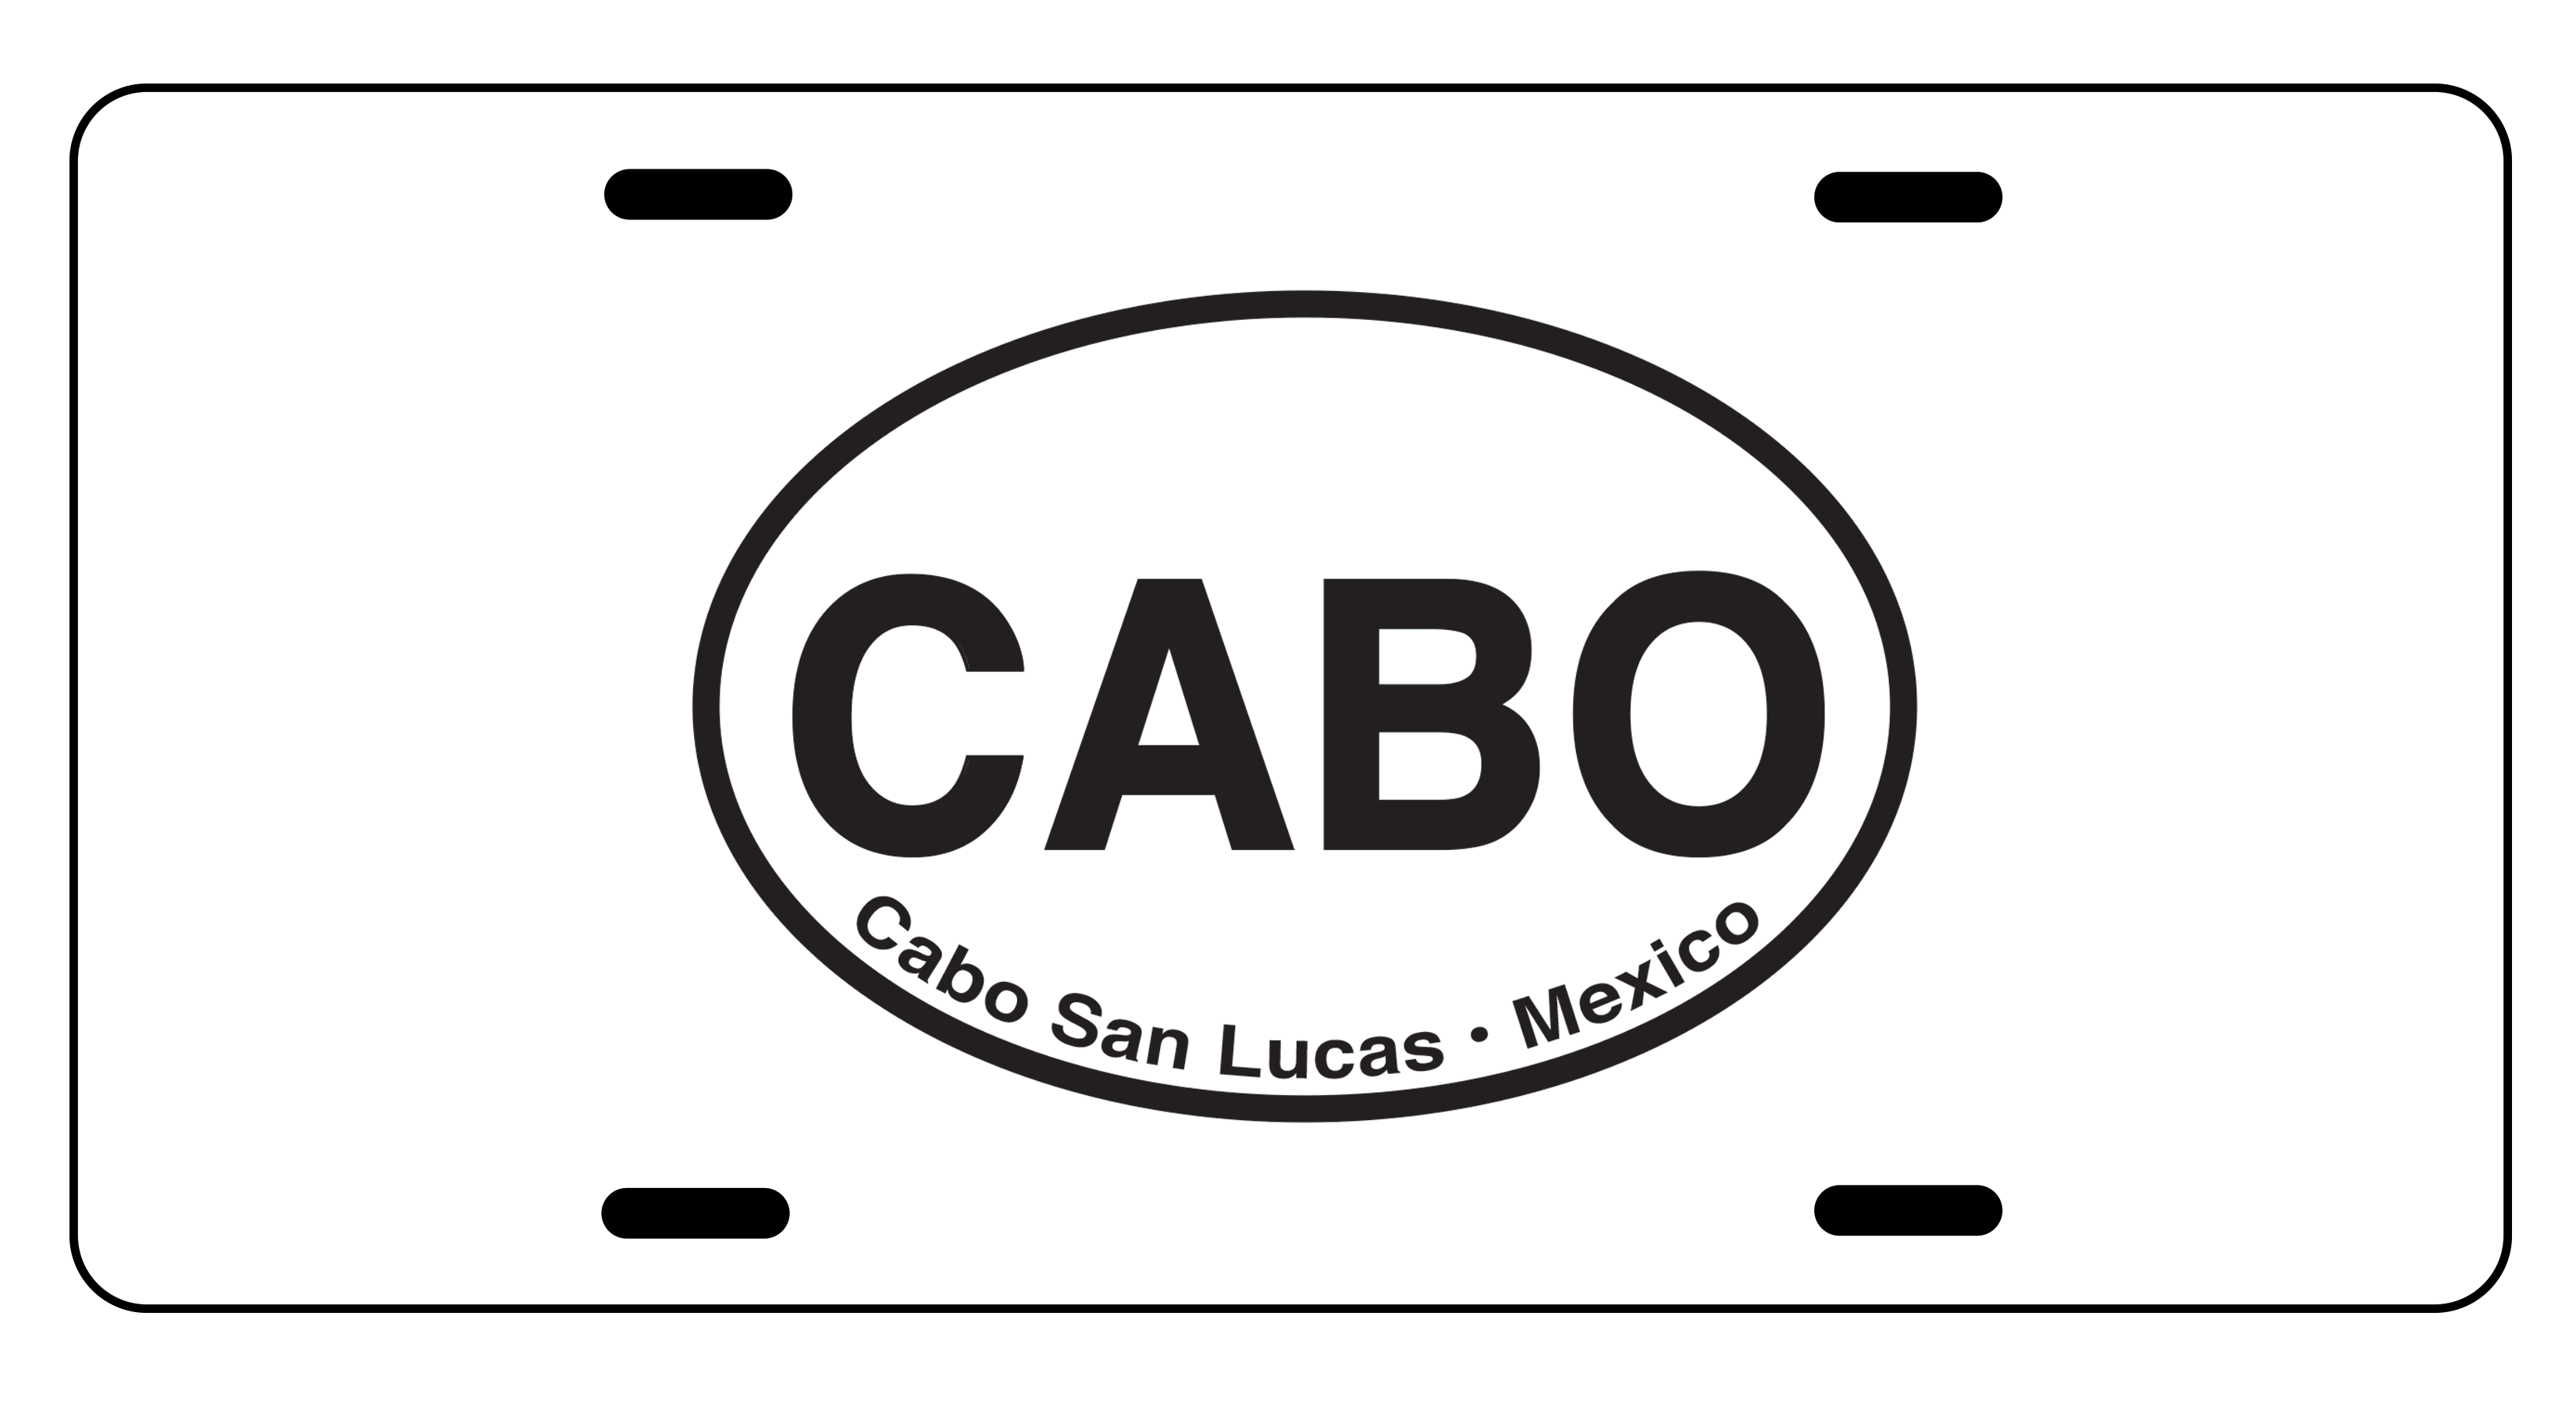 Cabo License Plates - My Destination Location